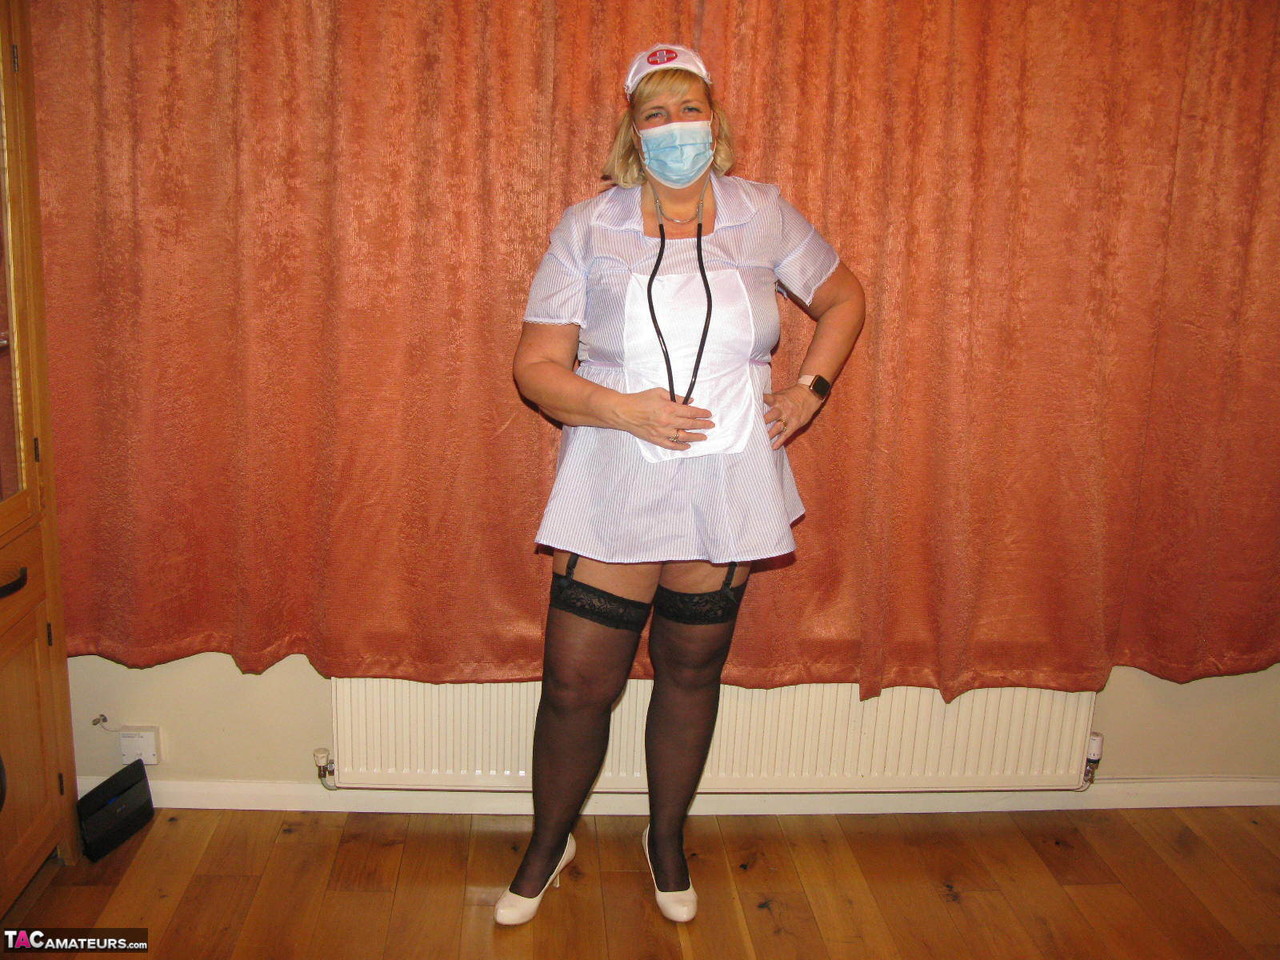 Fat nurse Chrissy Uk removes a surgical mask and uniform to model lingerie foto porno #424682137 | TAC Amateurs Pics, Chrissy Uk, Mature, porno ponsel